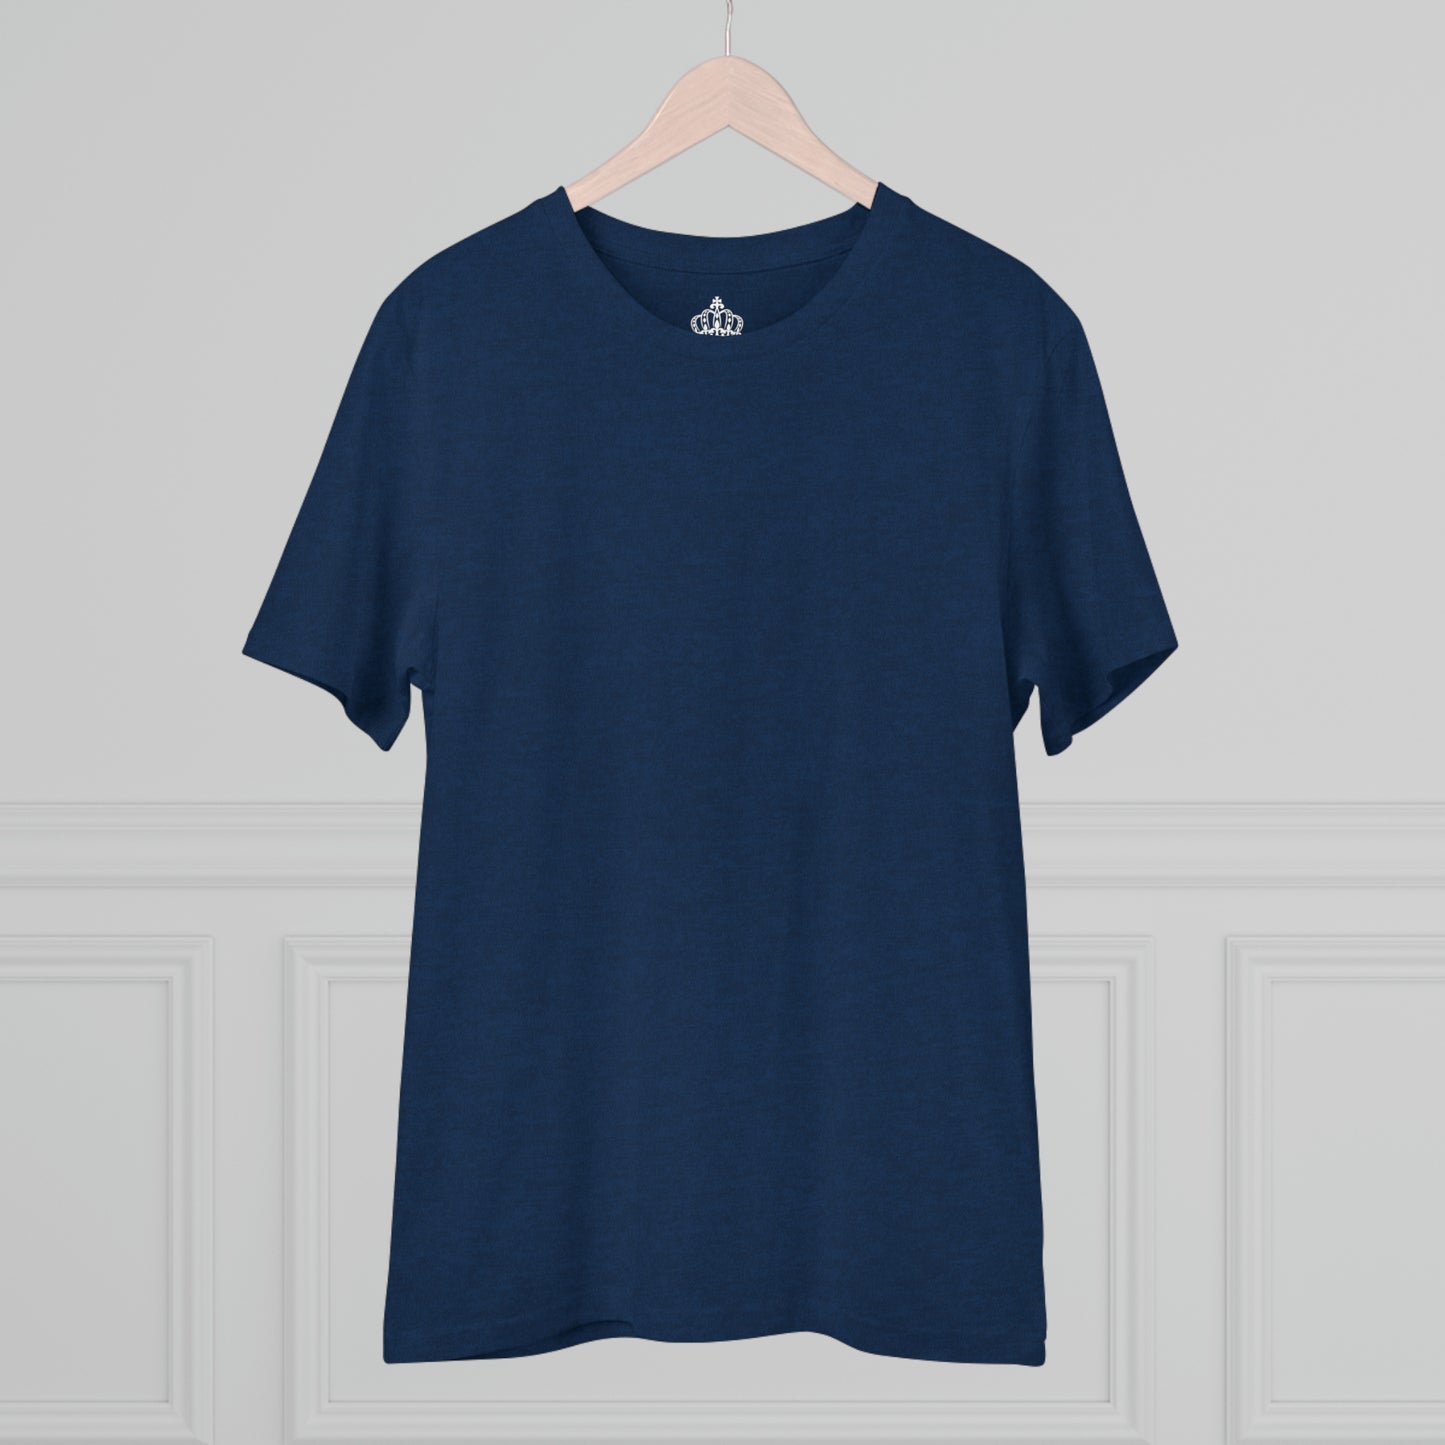 Black Heather Blue - Organic Creator T-shirt - Unisex